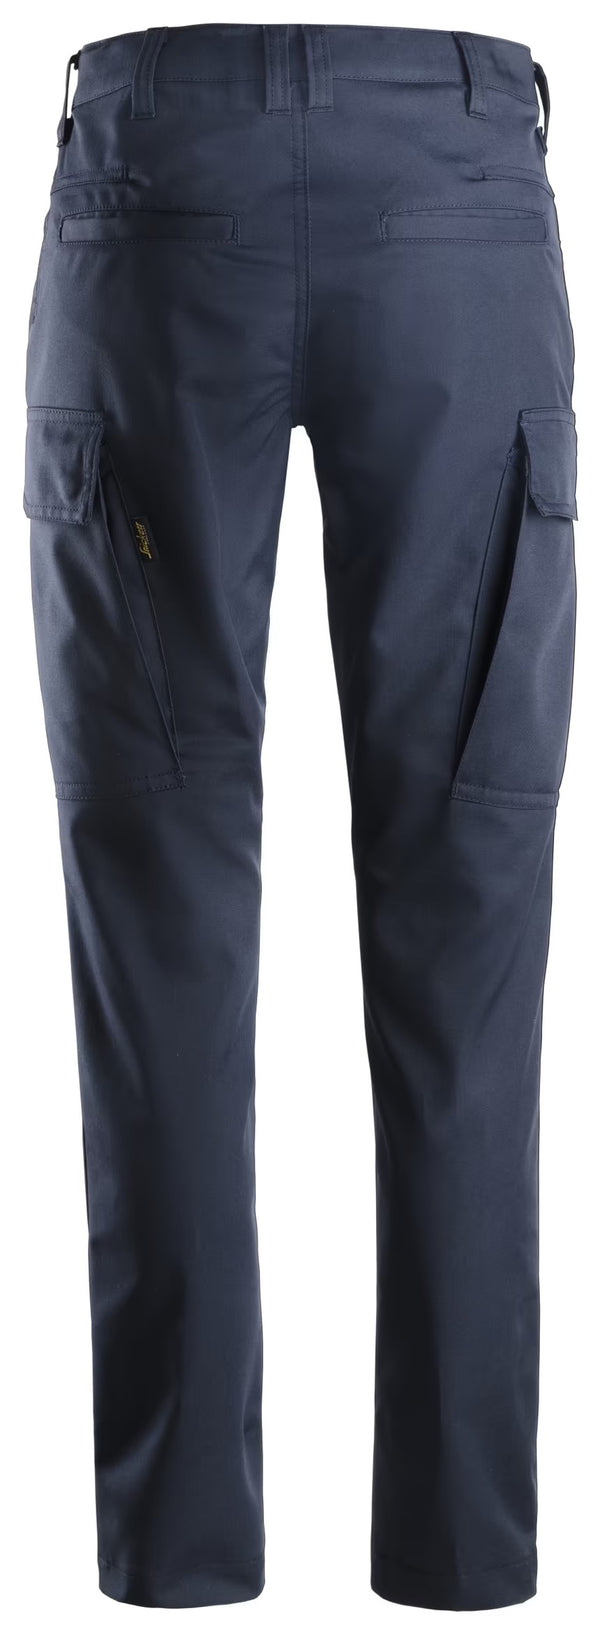 Snickers Workwear 6700 Women's Service Trousers - Navy